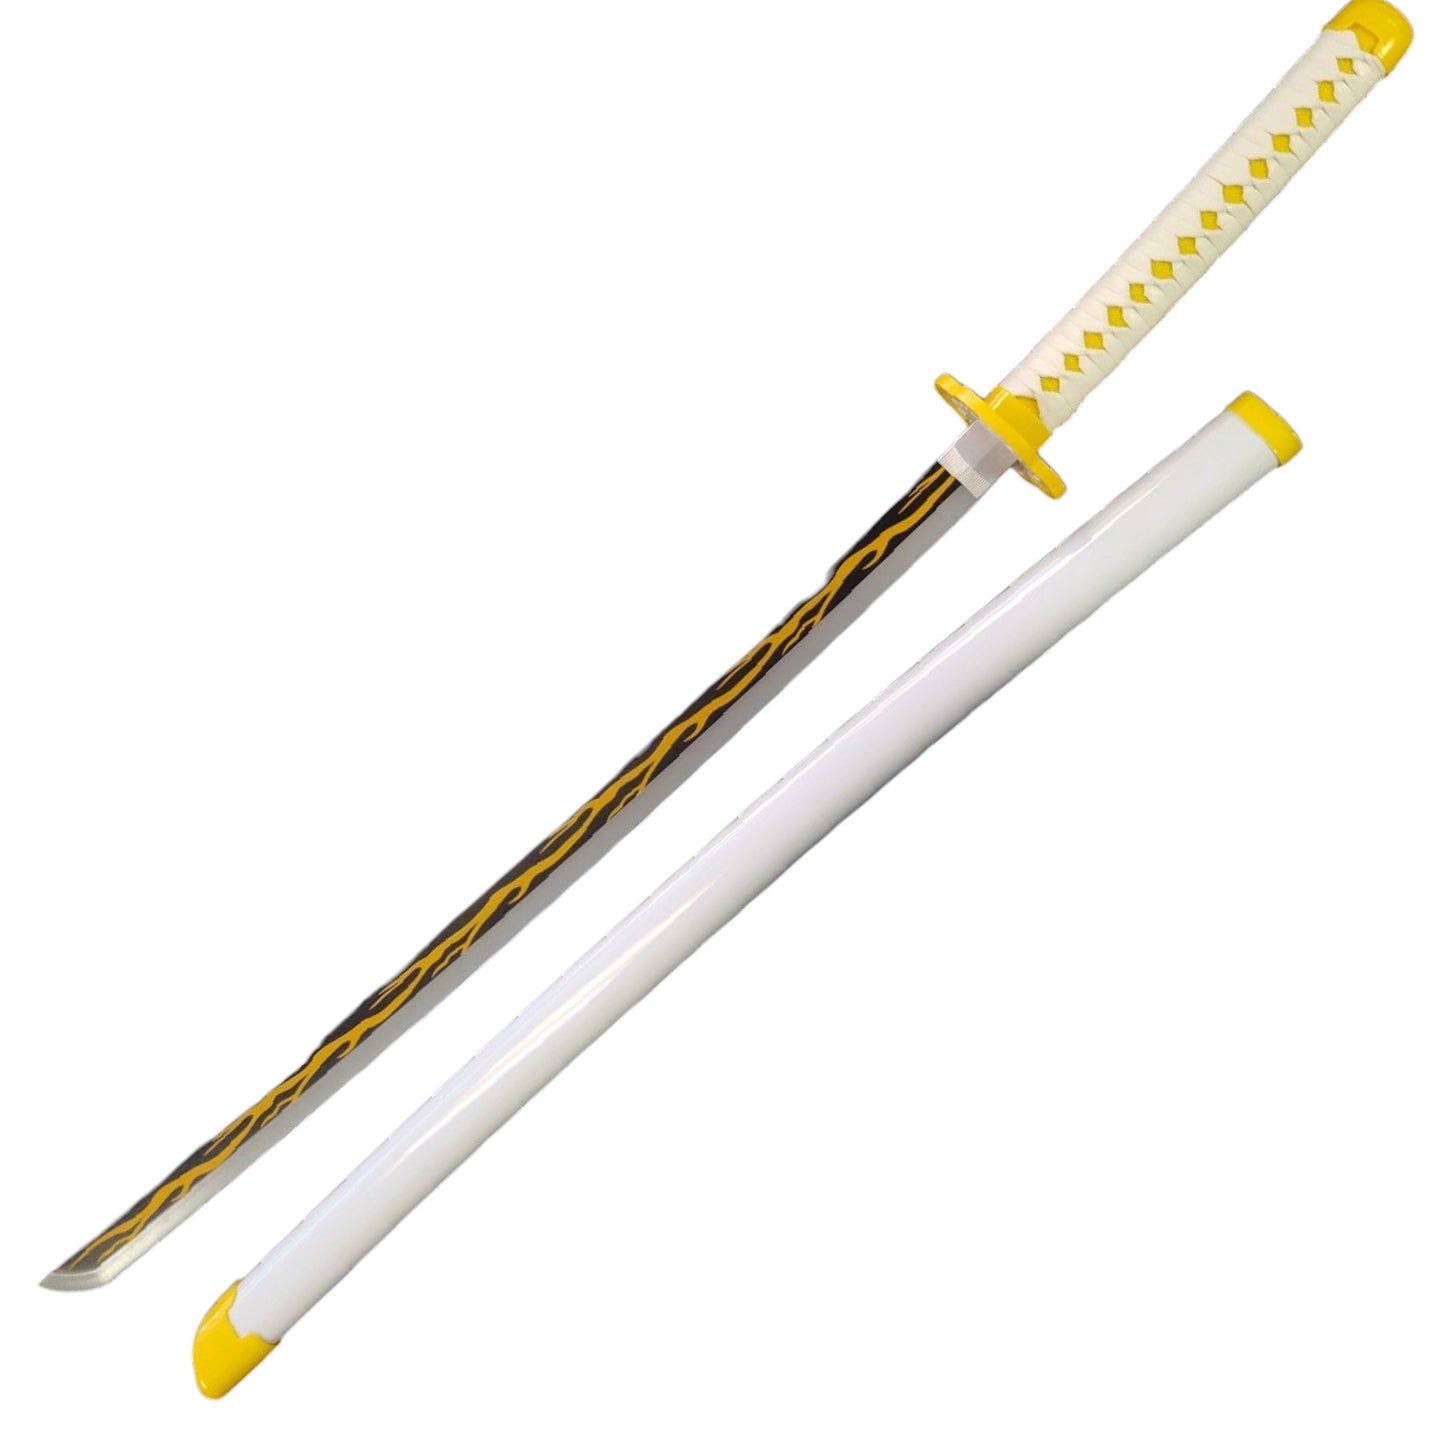 Demon Slayer Light Up Replica Bamboo Swords